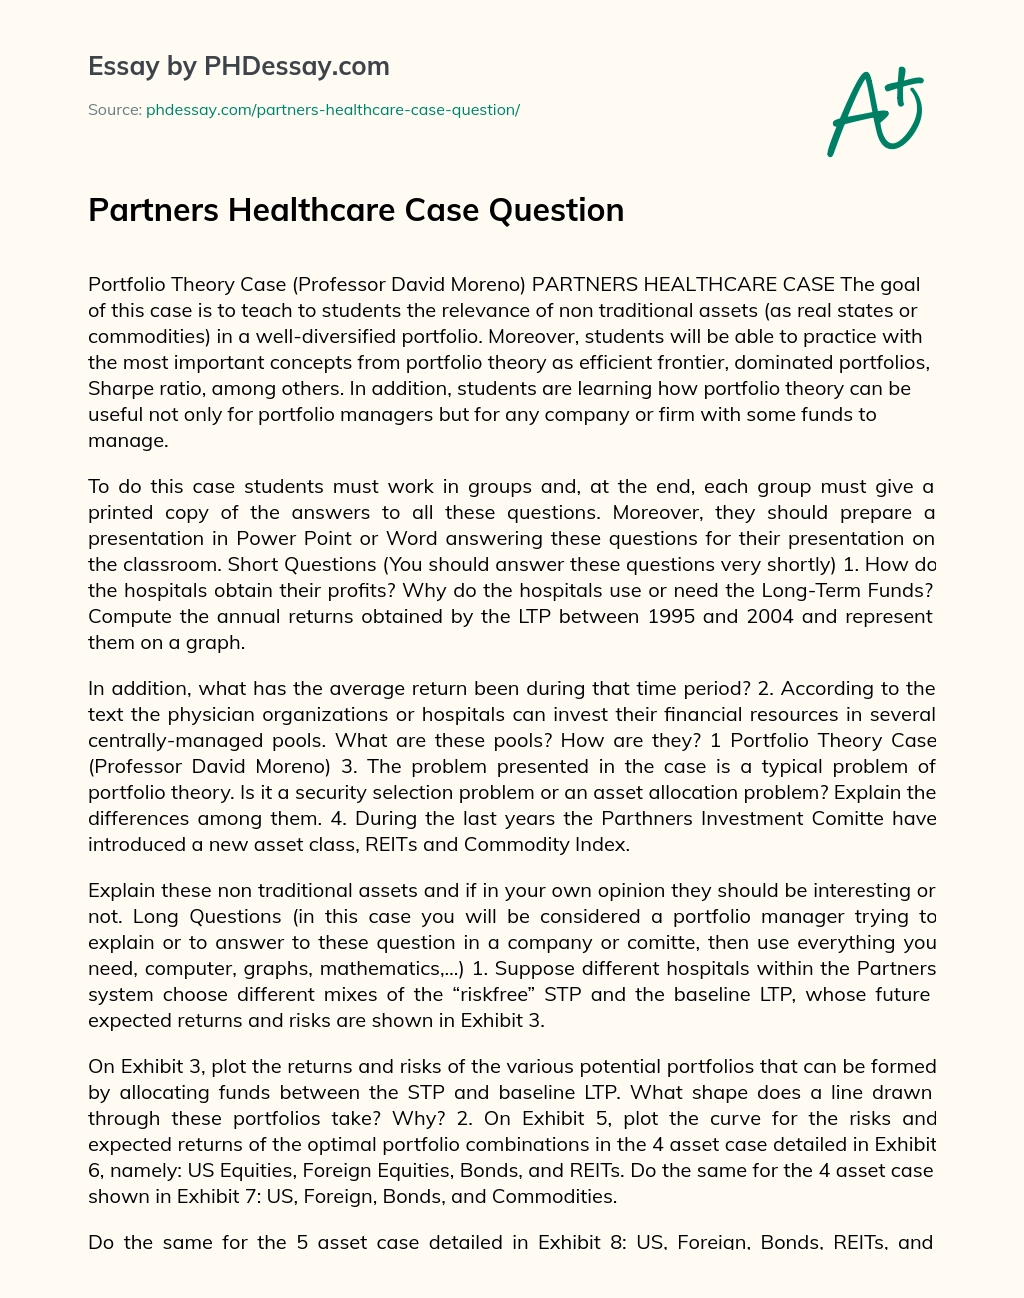 Partners Healthcare Case Question essay